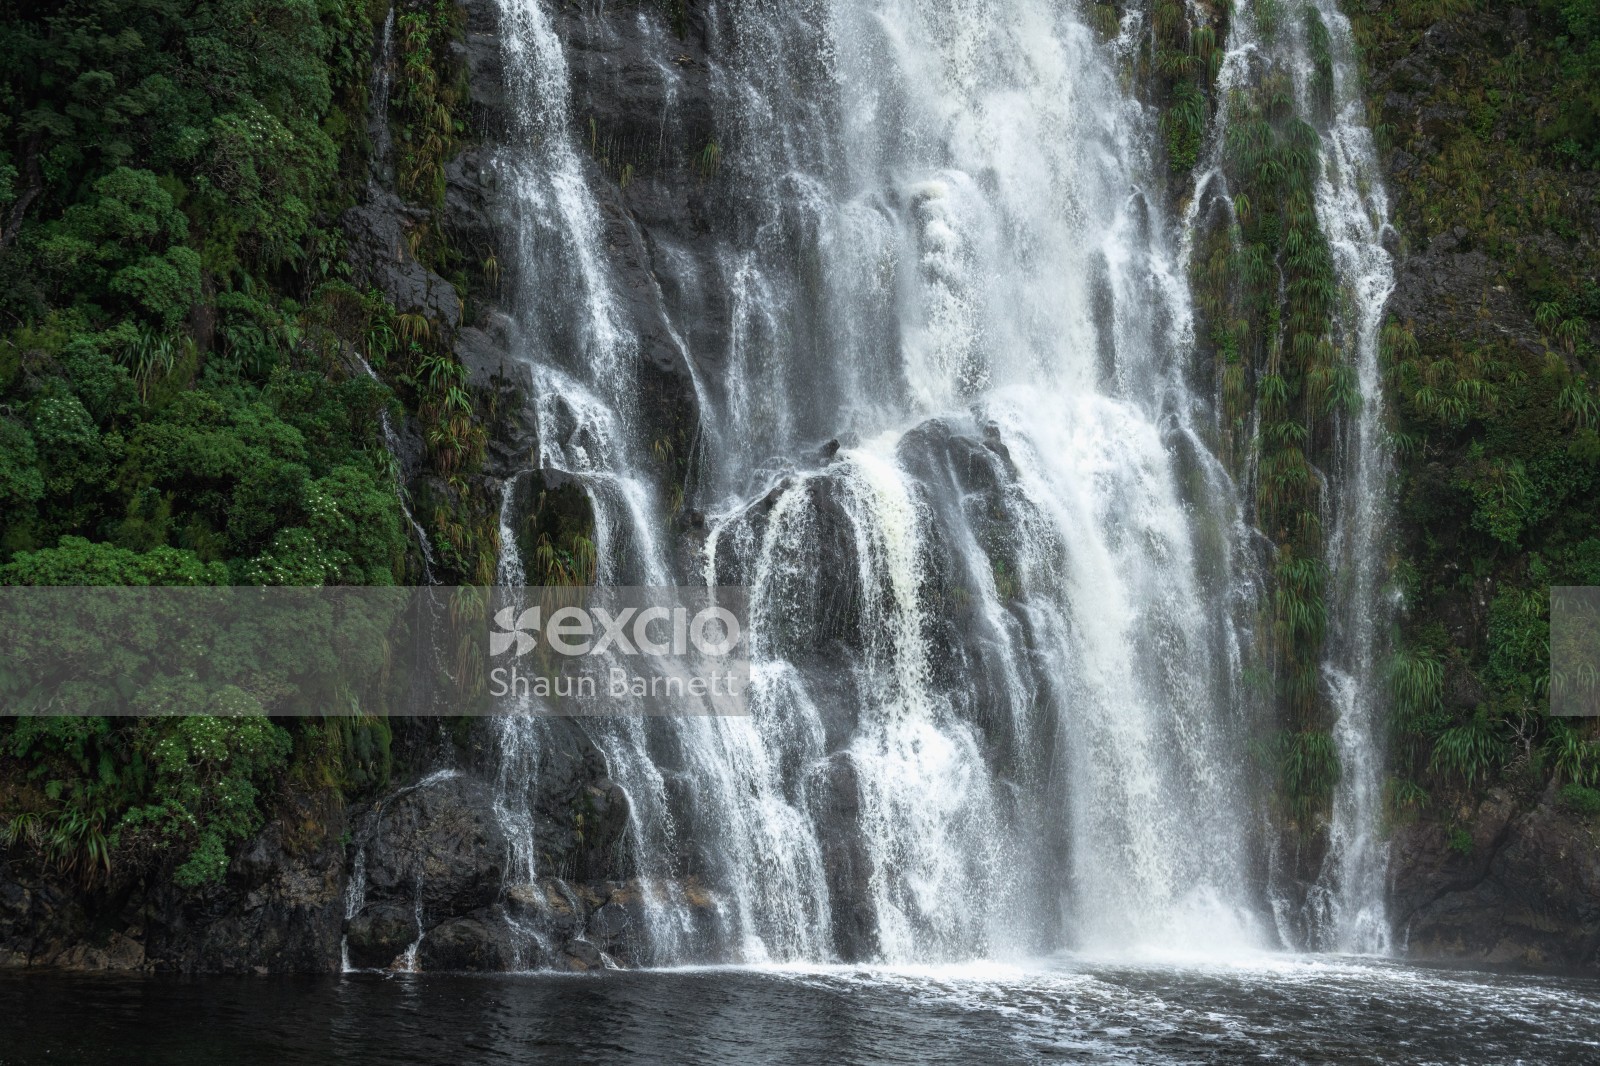 Waterfall, Acheron Passage